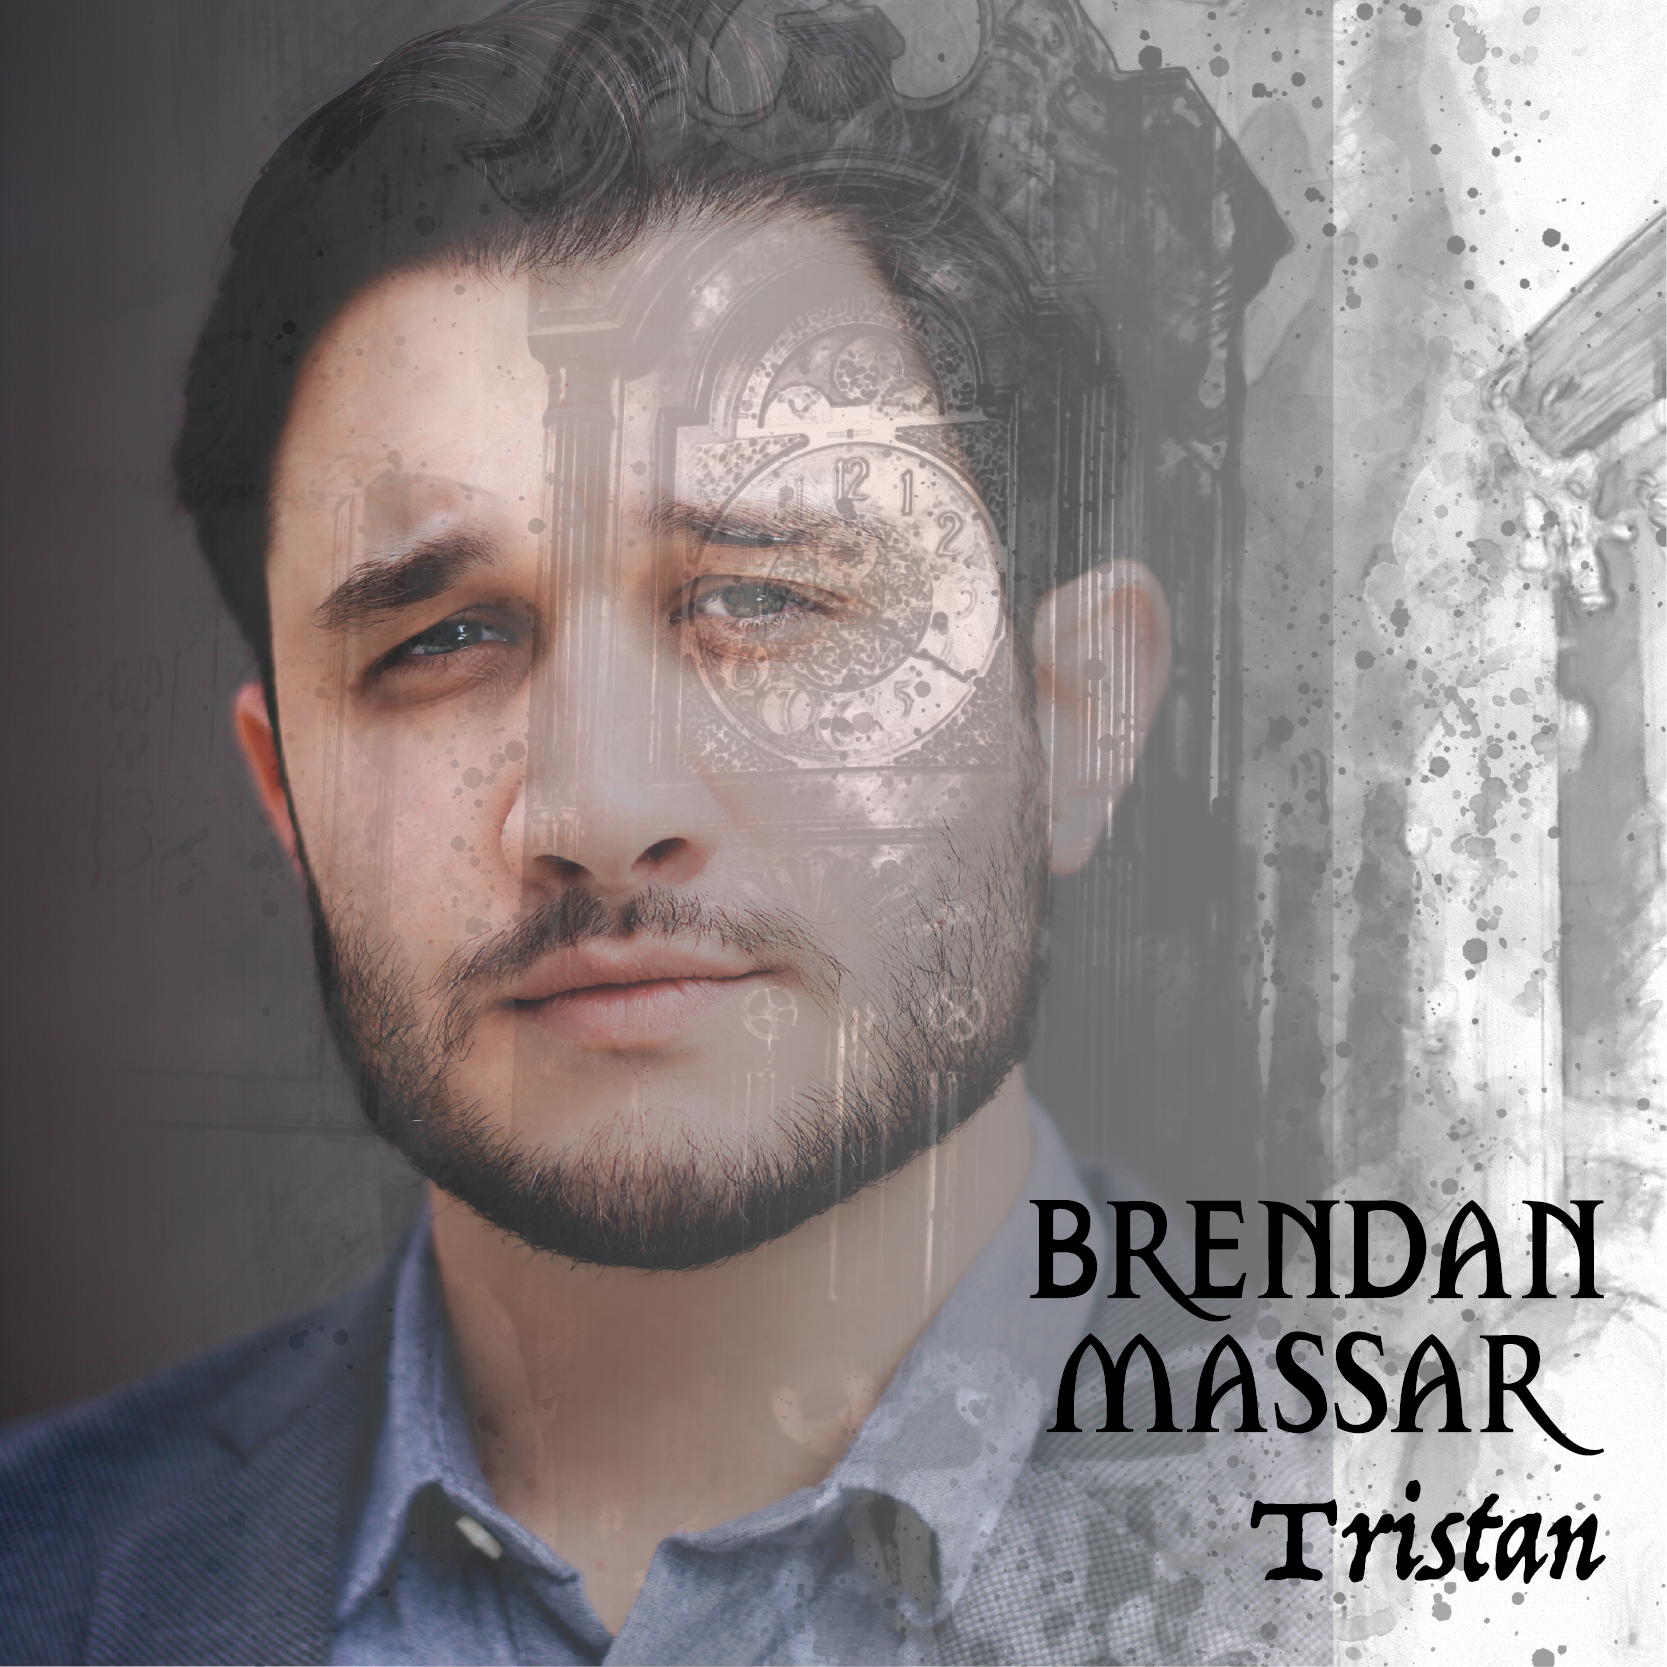 Brendan Massar is Tristan